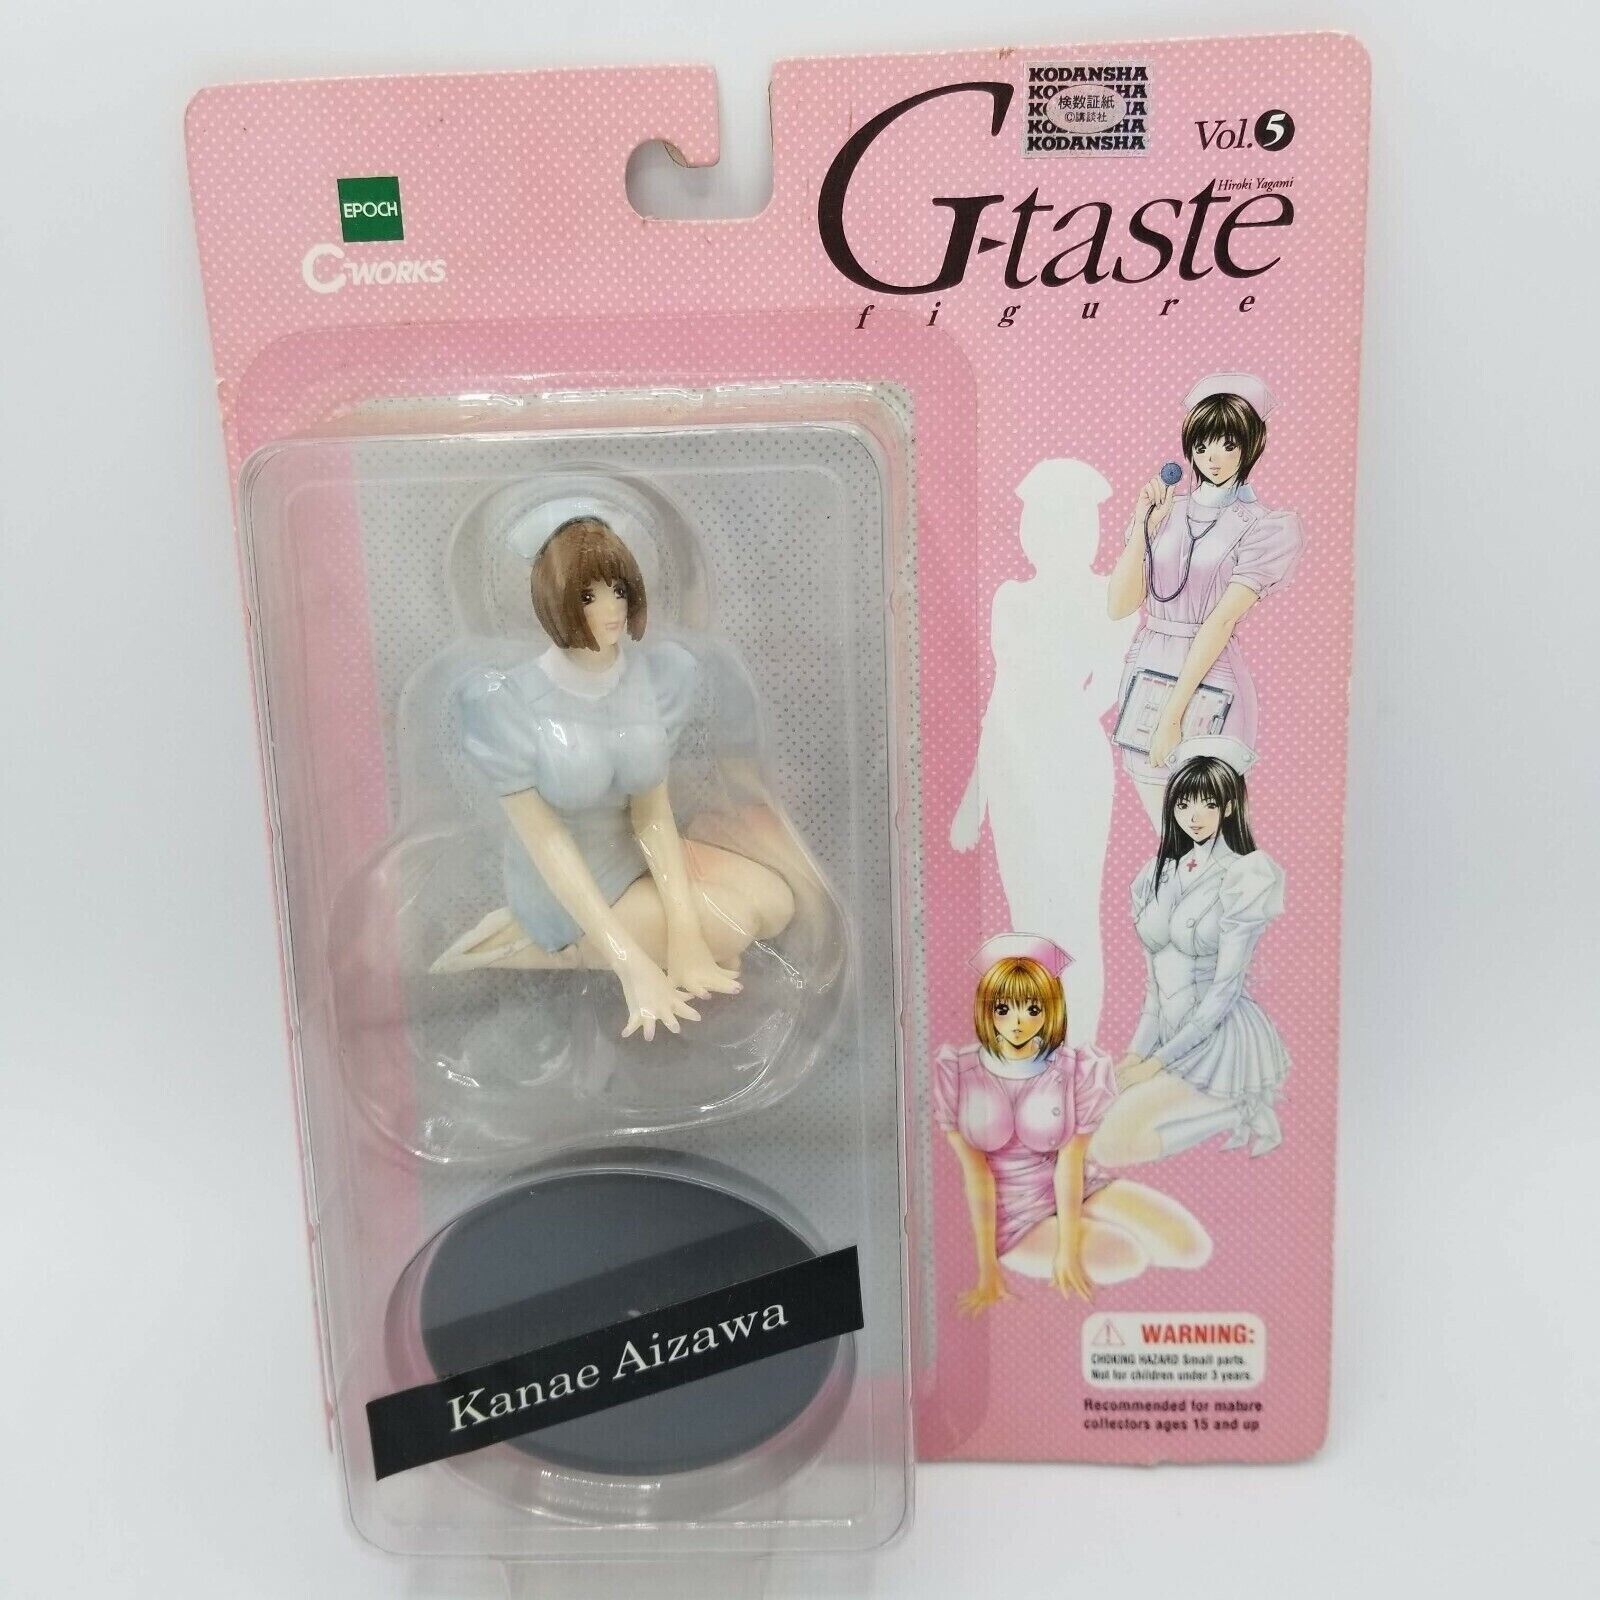 G-taste / Hiroki Yagami Gashapon / G-Taste Figure Vol 5: Aizawa Kanae New in box